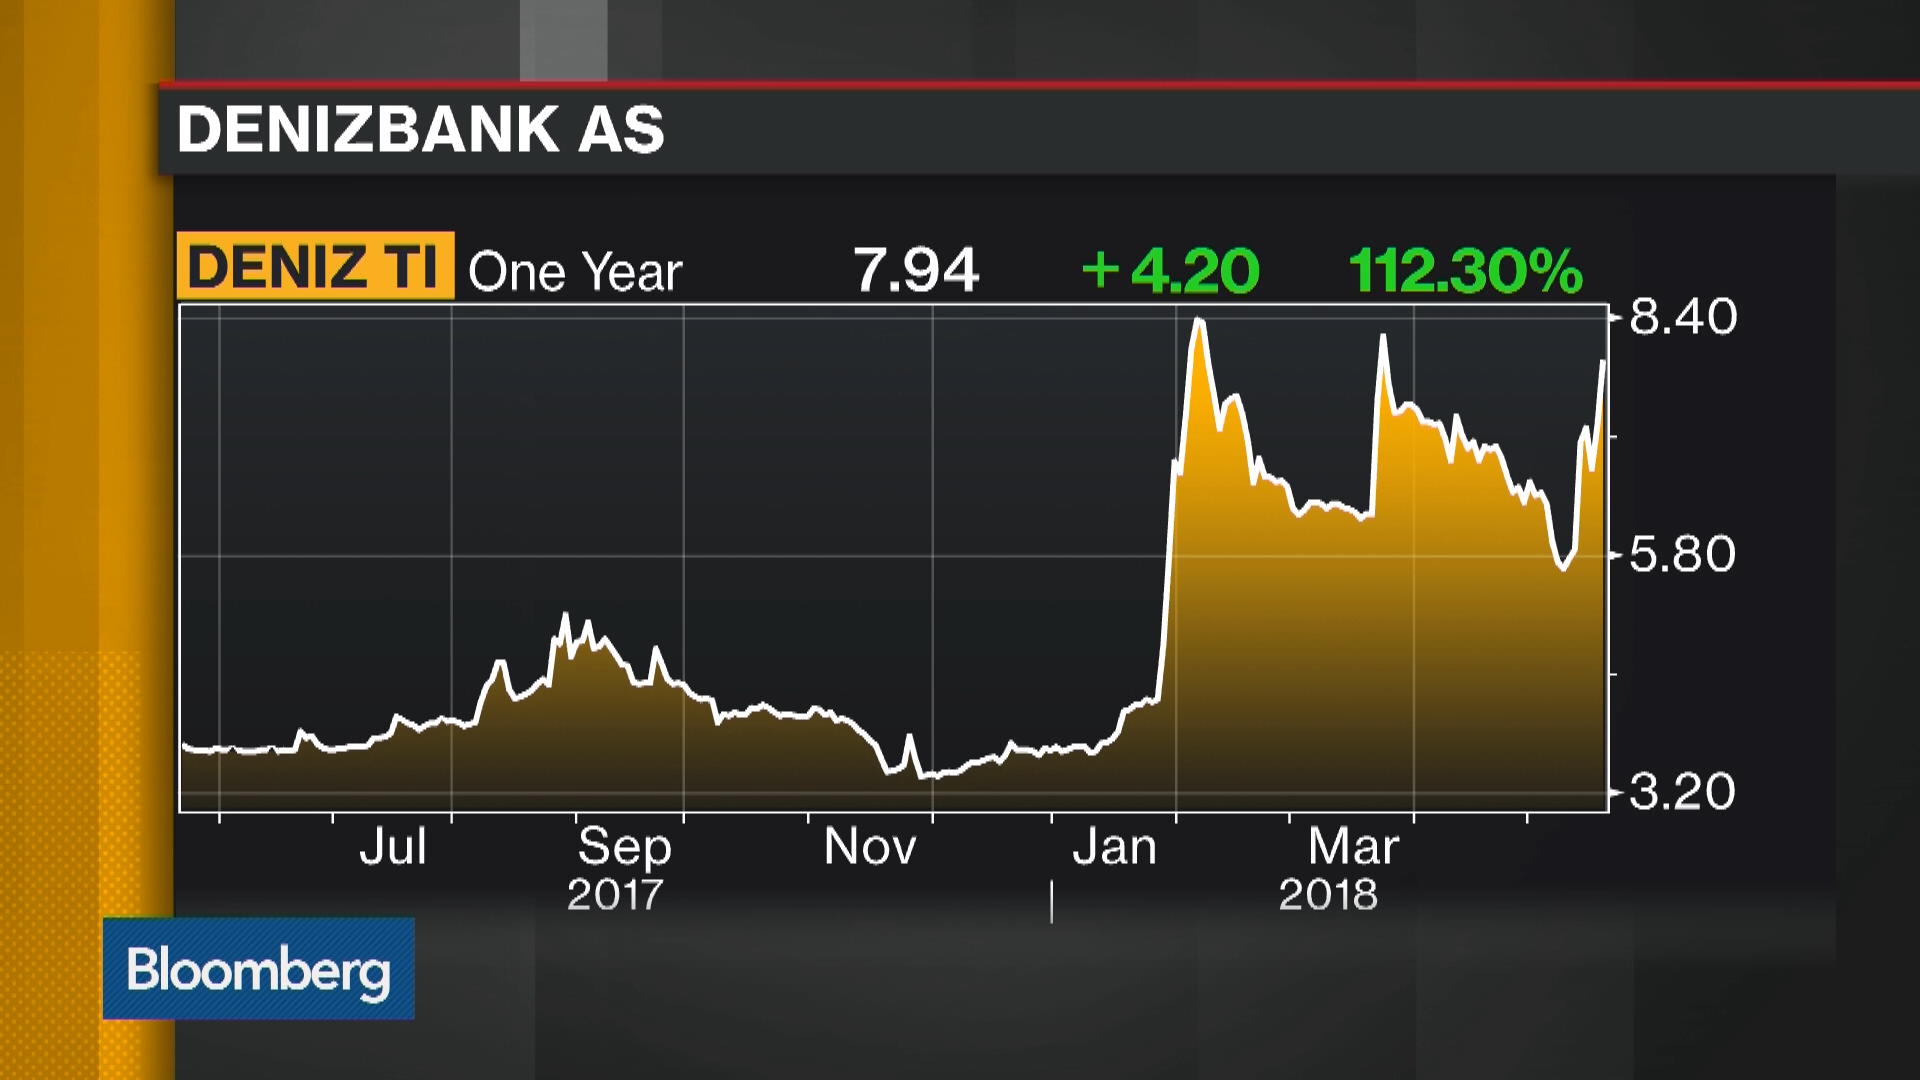 Sberbank Stock Chart